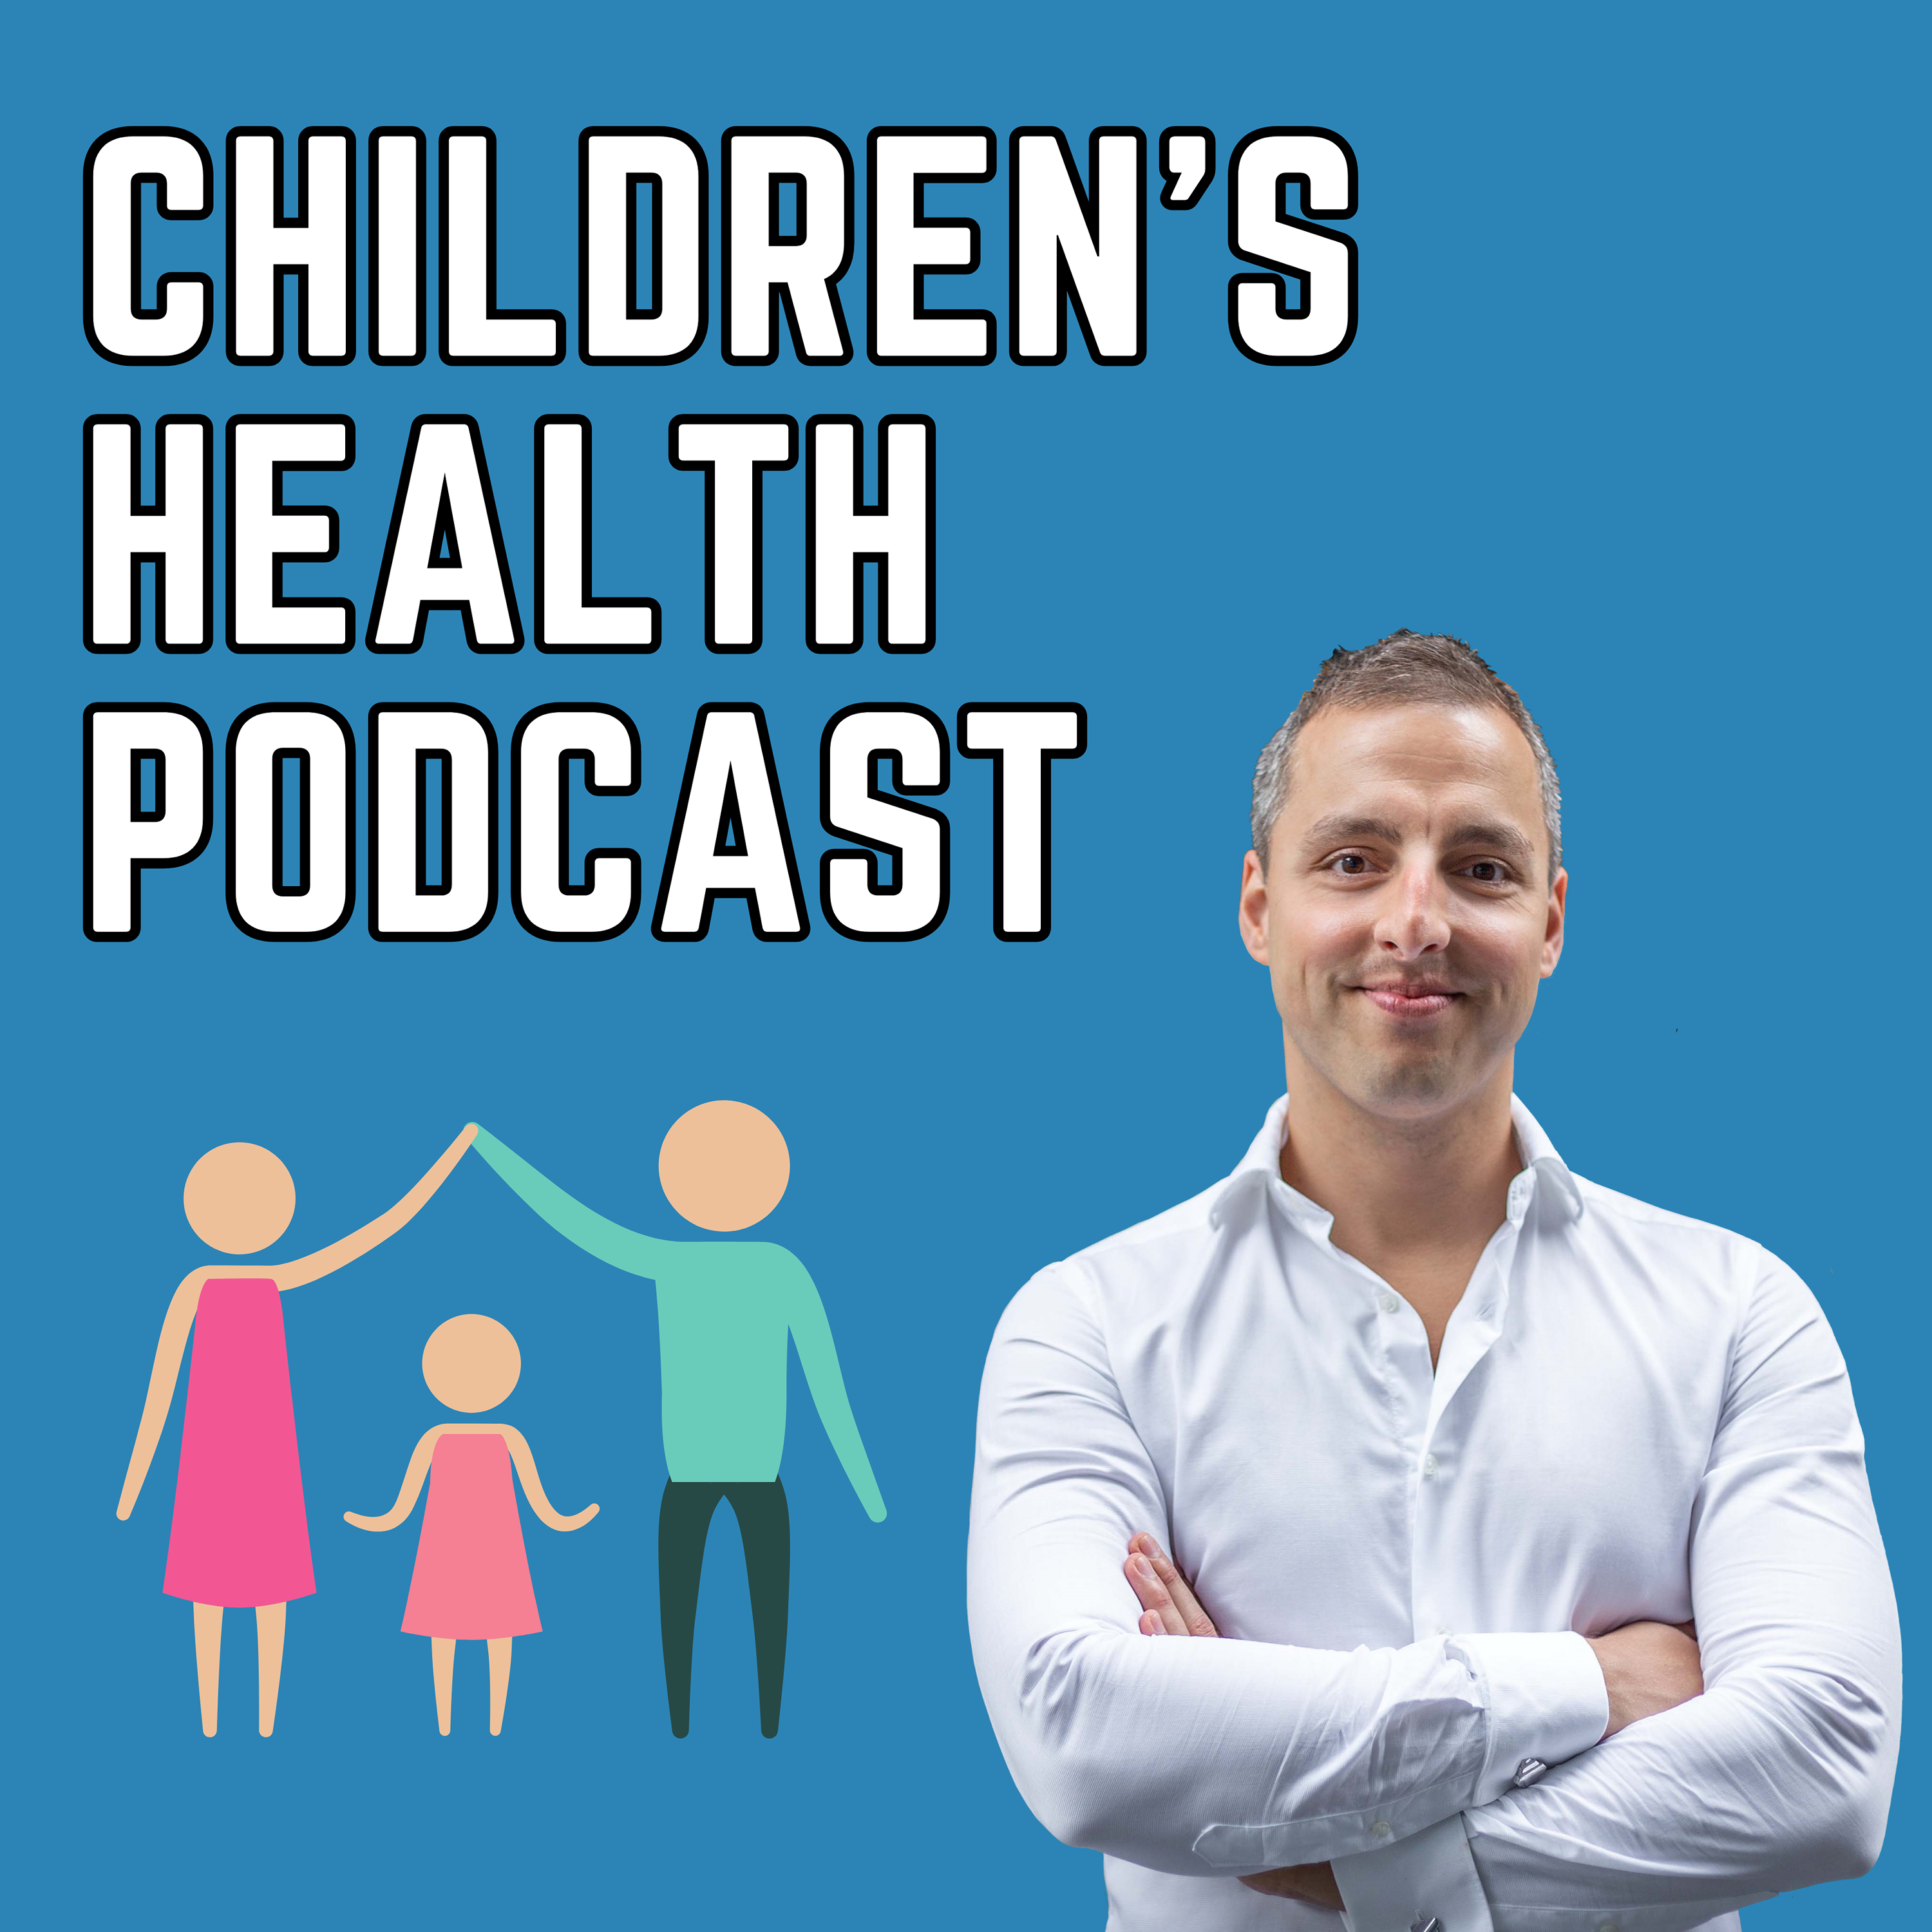 Children's Health Podcast